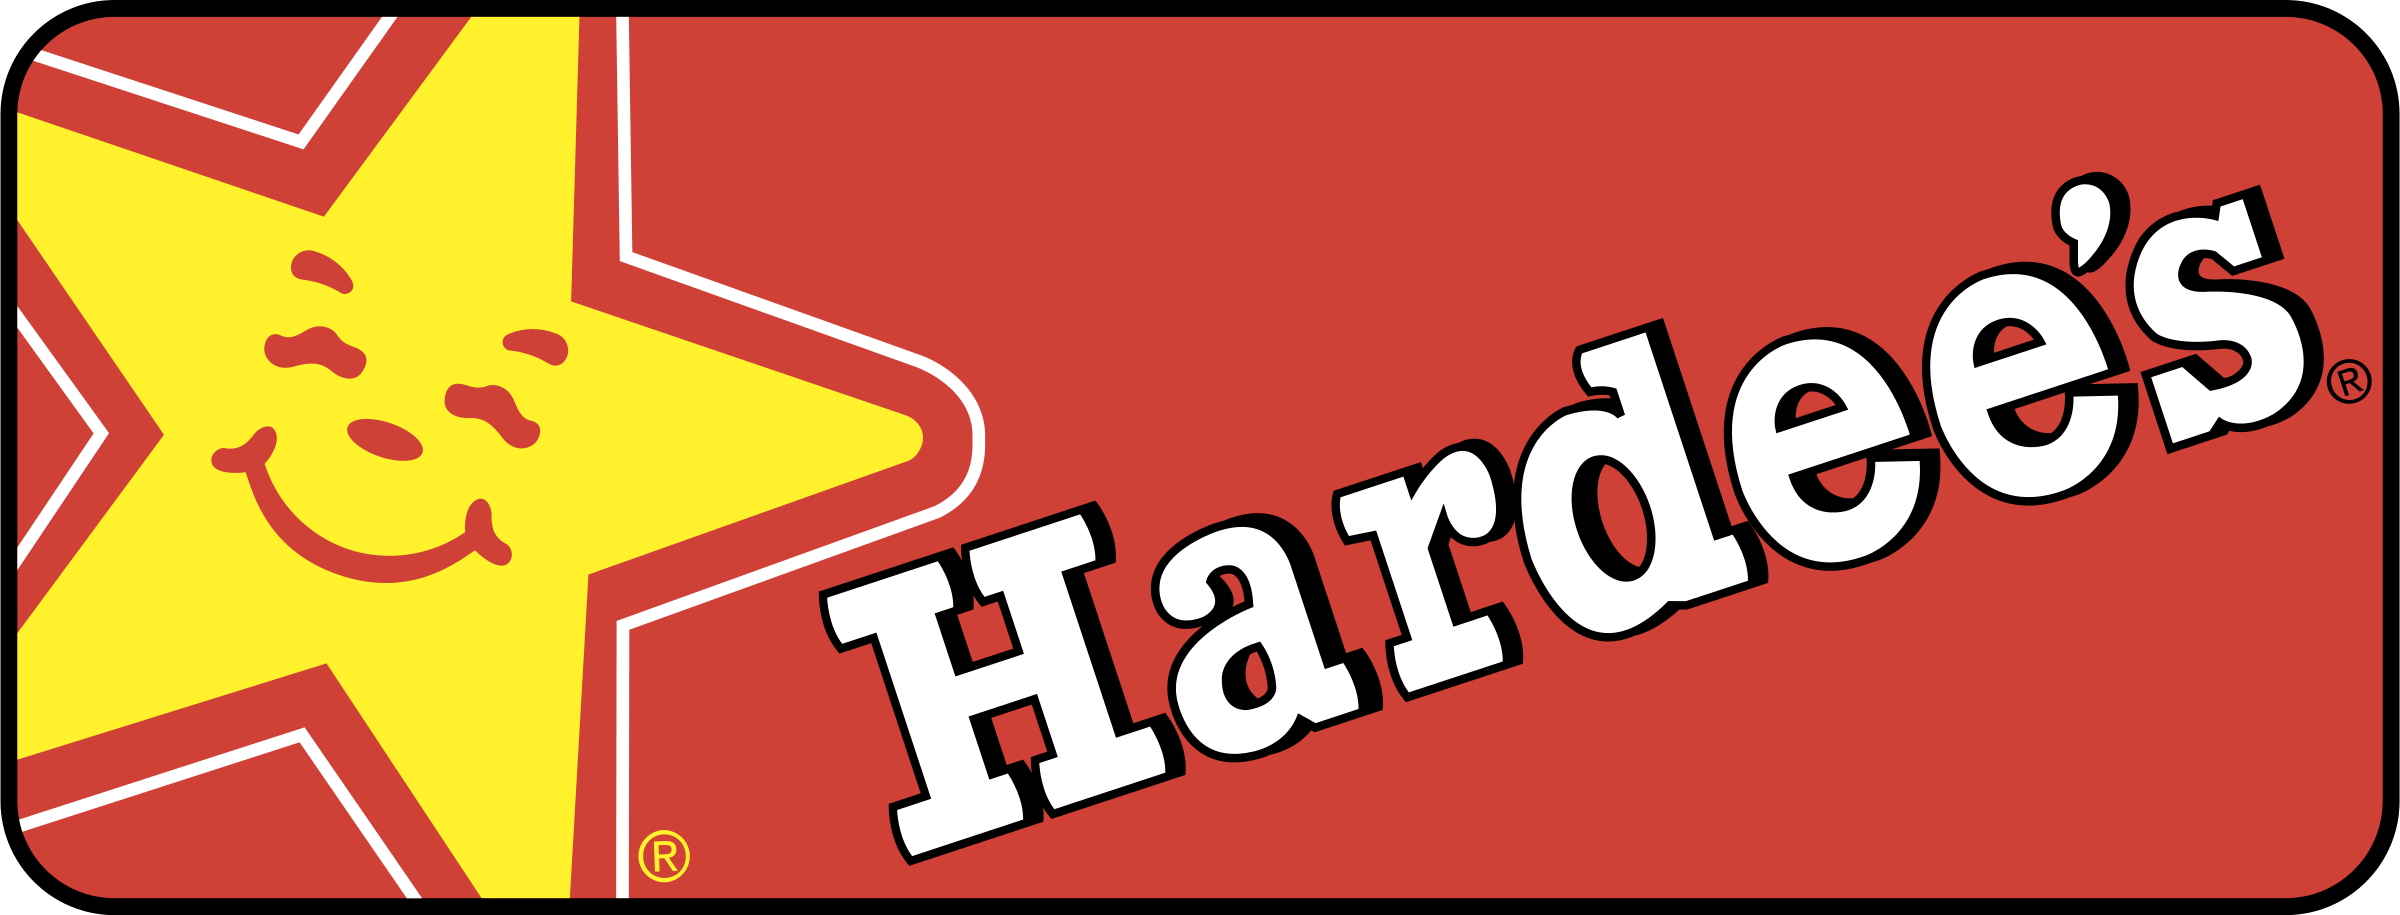 Hardee's Logo - Hardee's Logo PNG Transparent & SVG Vector